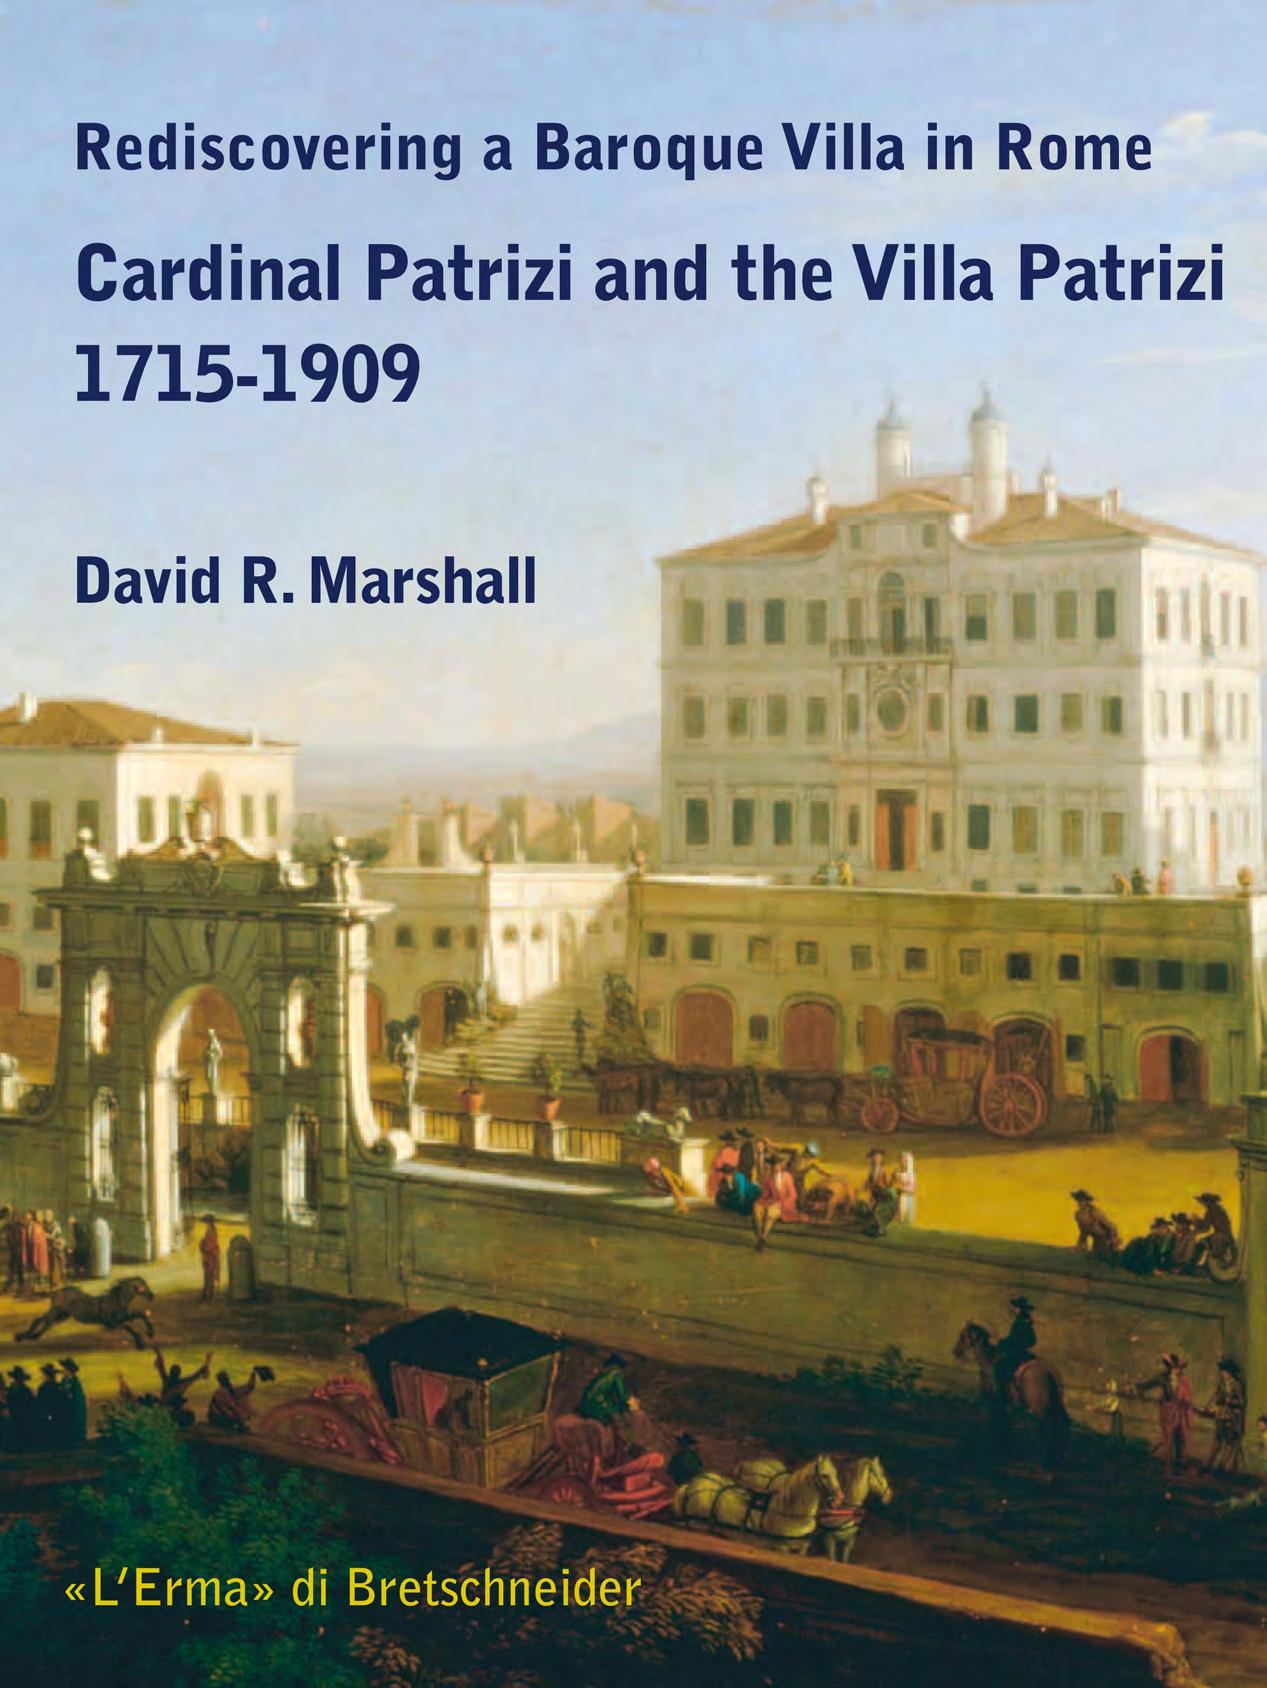 Rediscovering a Baroque Villa in Rome: Cardinal Patrizi and the Villa Patrizi 1715-1909 by David R. Marshall